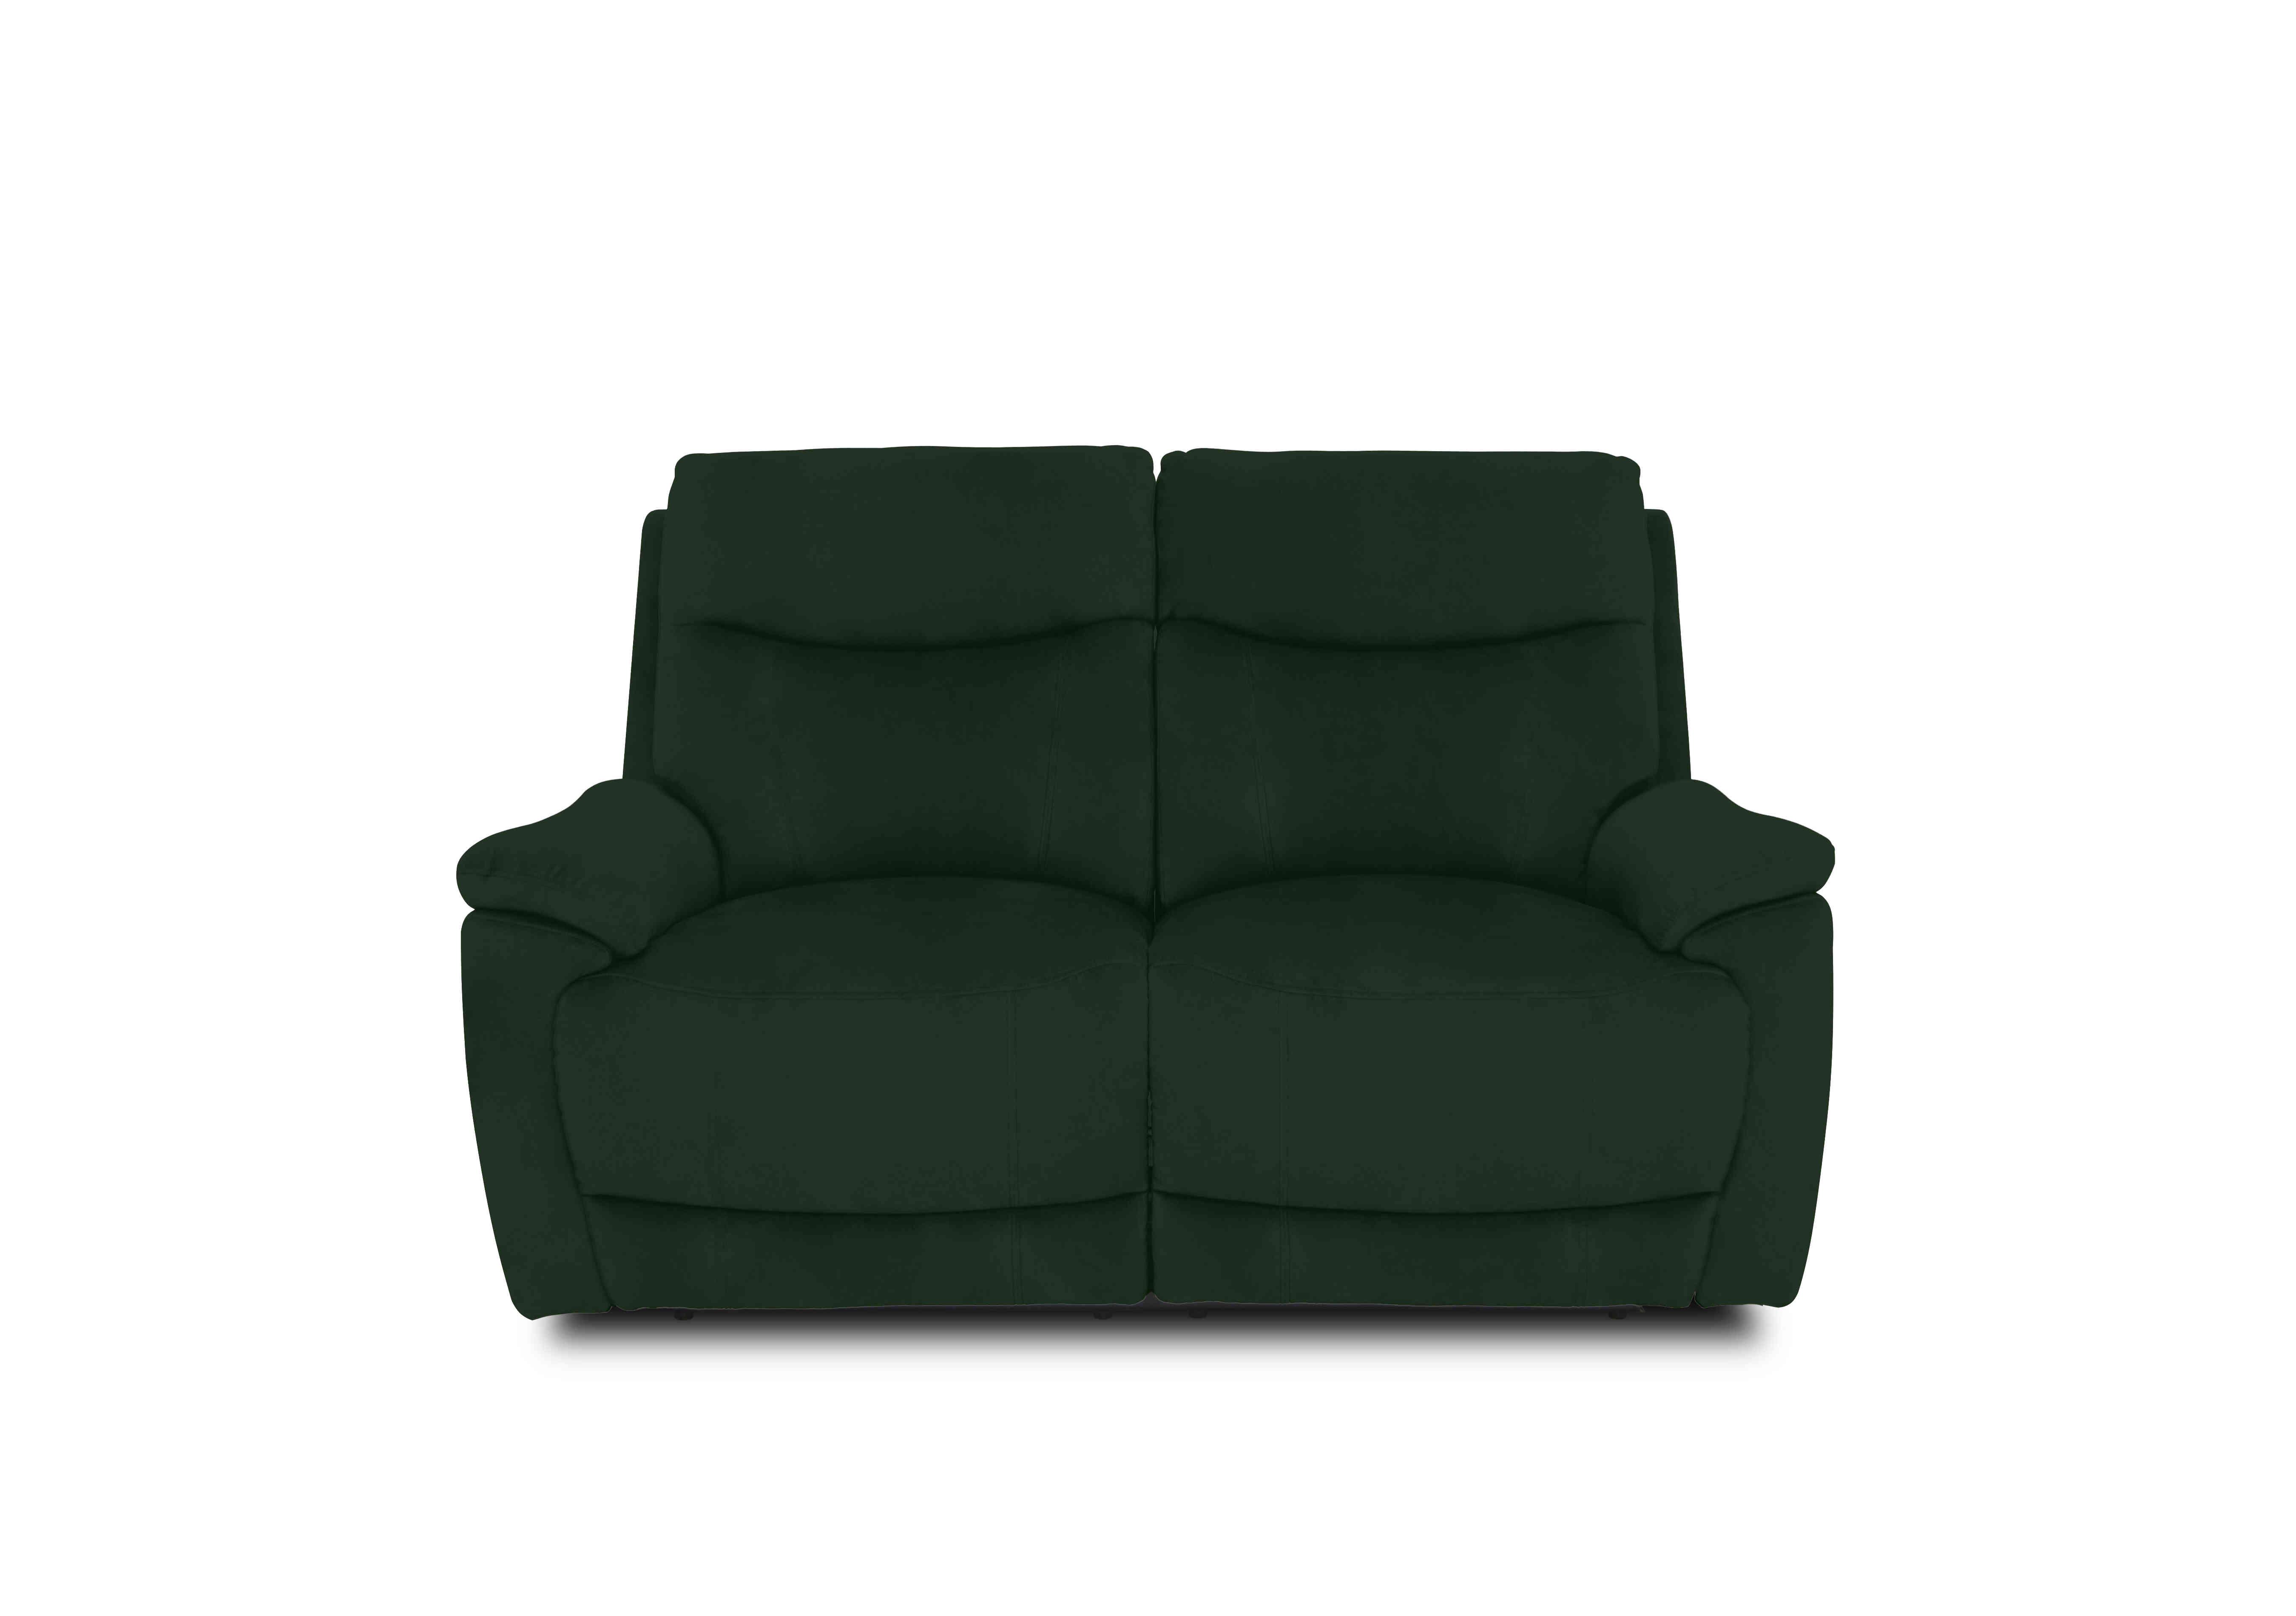 Sloane 2 Seater Fabric Sofa in 51011 Opulence Bottle Green on Furniture Village